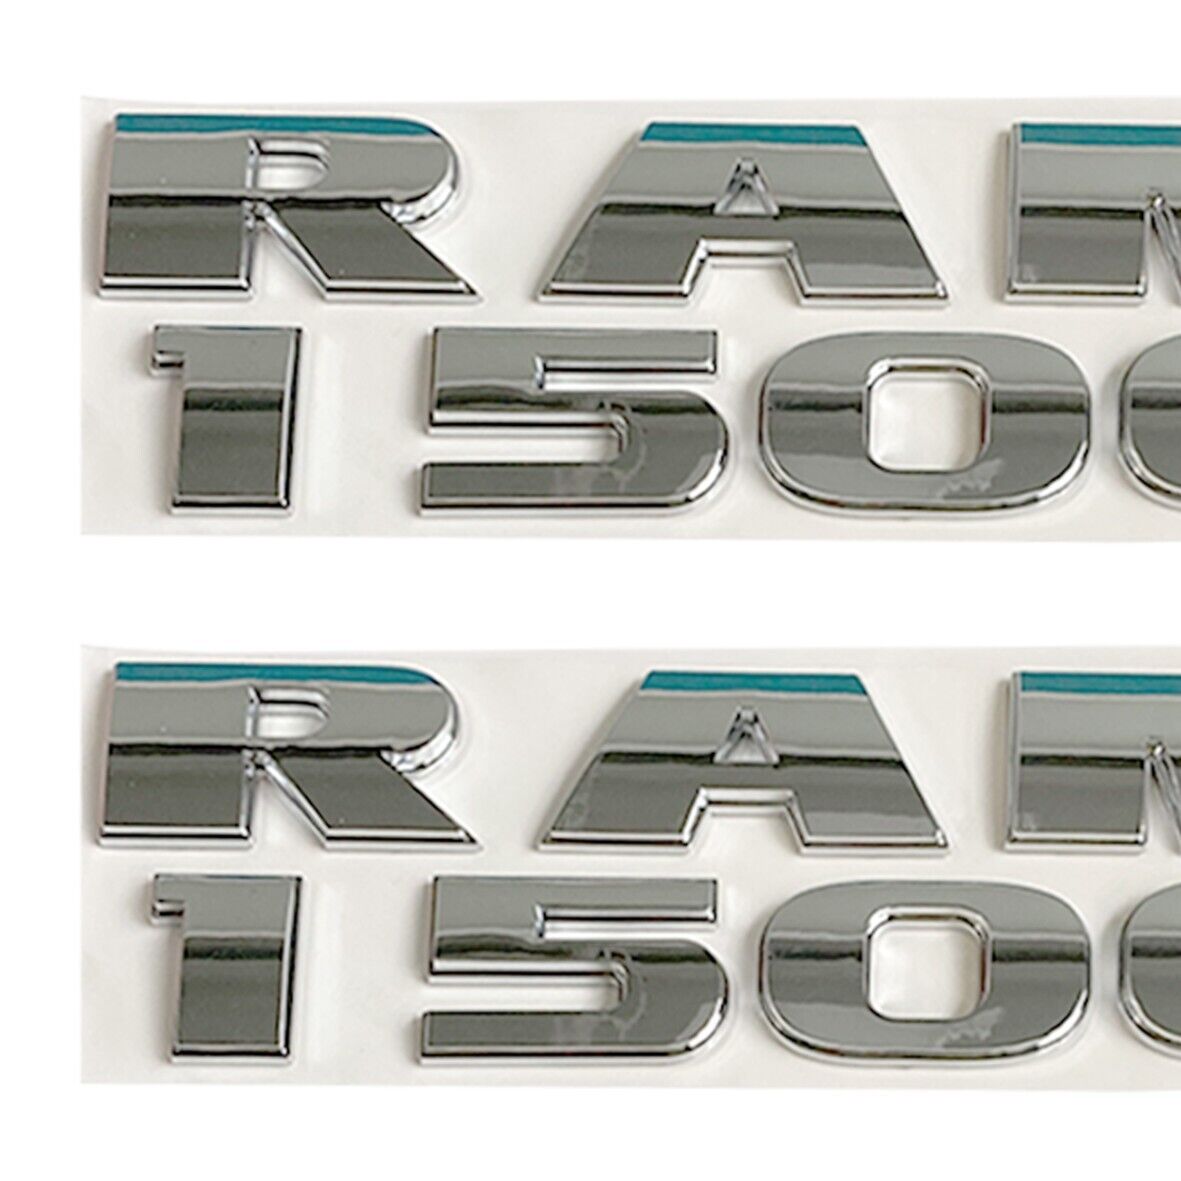 2X Chrome 3D Raised Emblems Letters Badges Replacement Fit For RAM 1500 Models